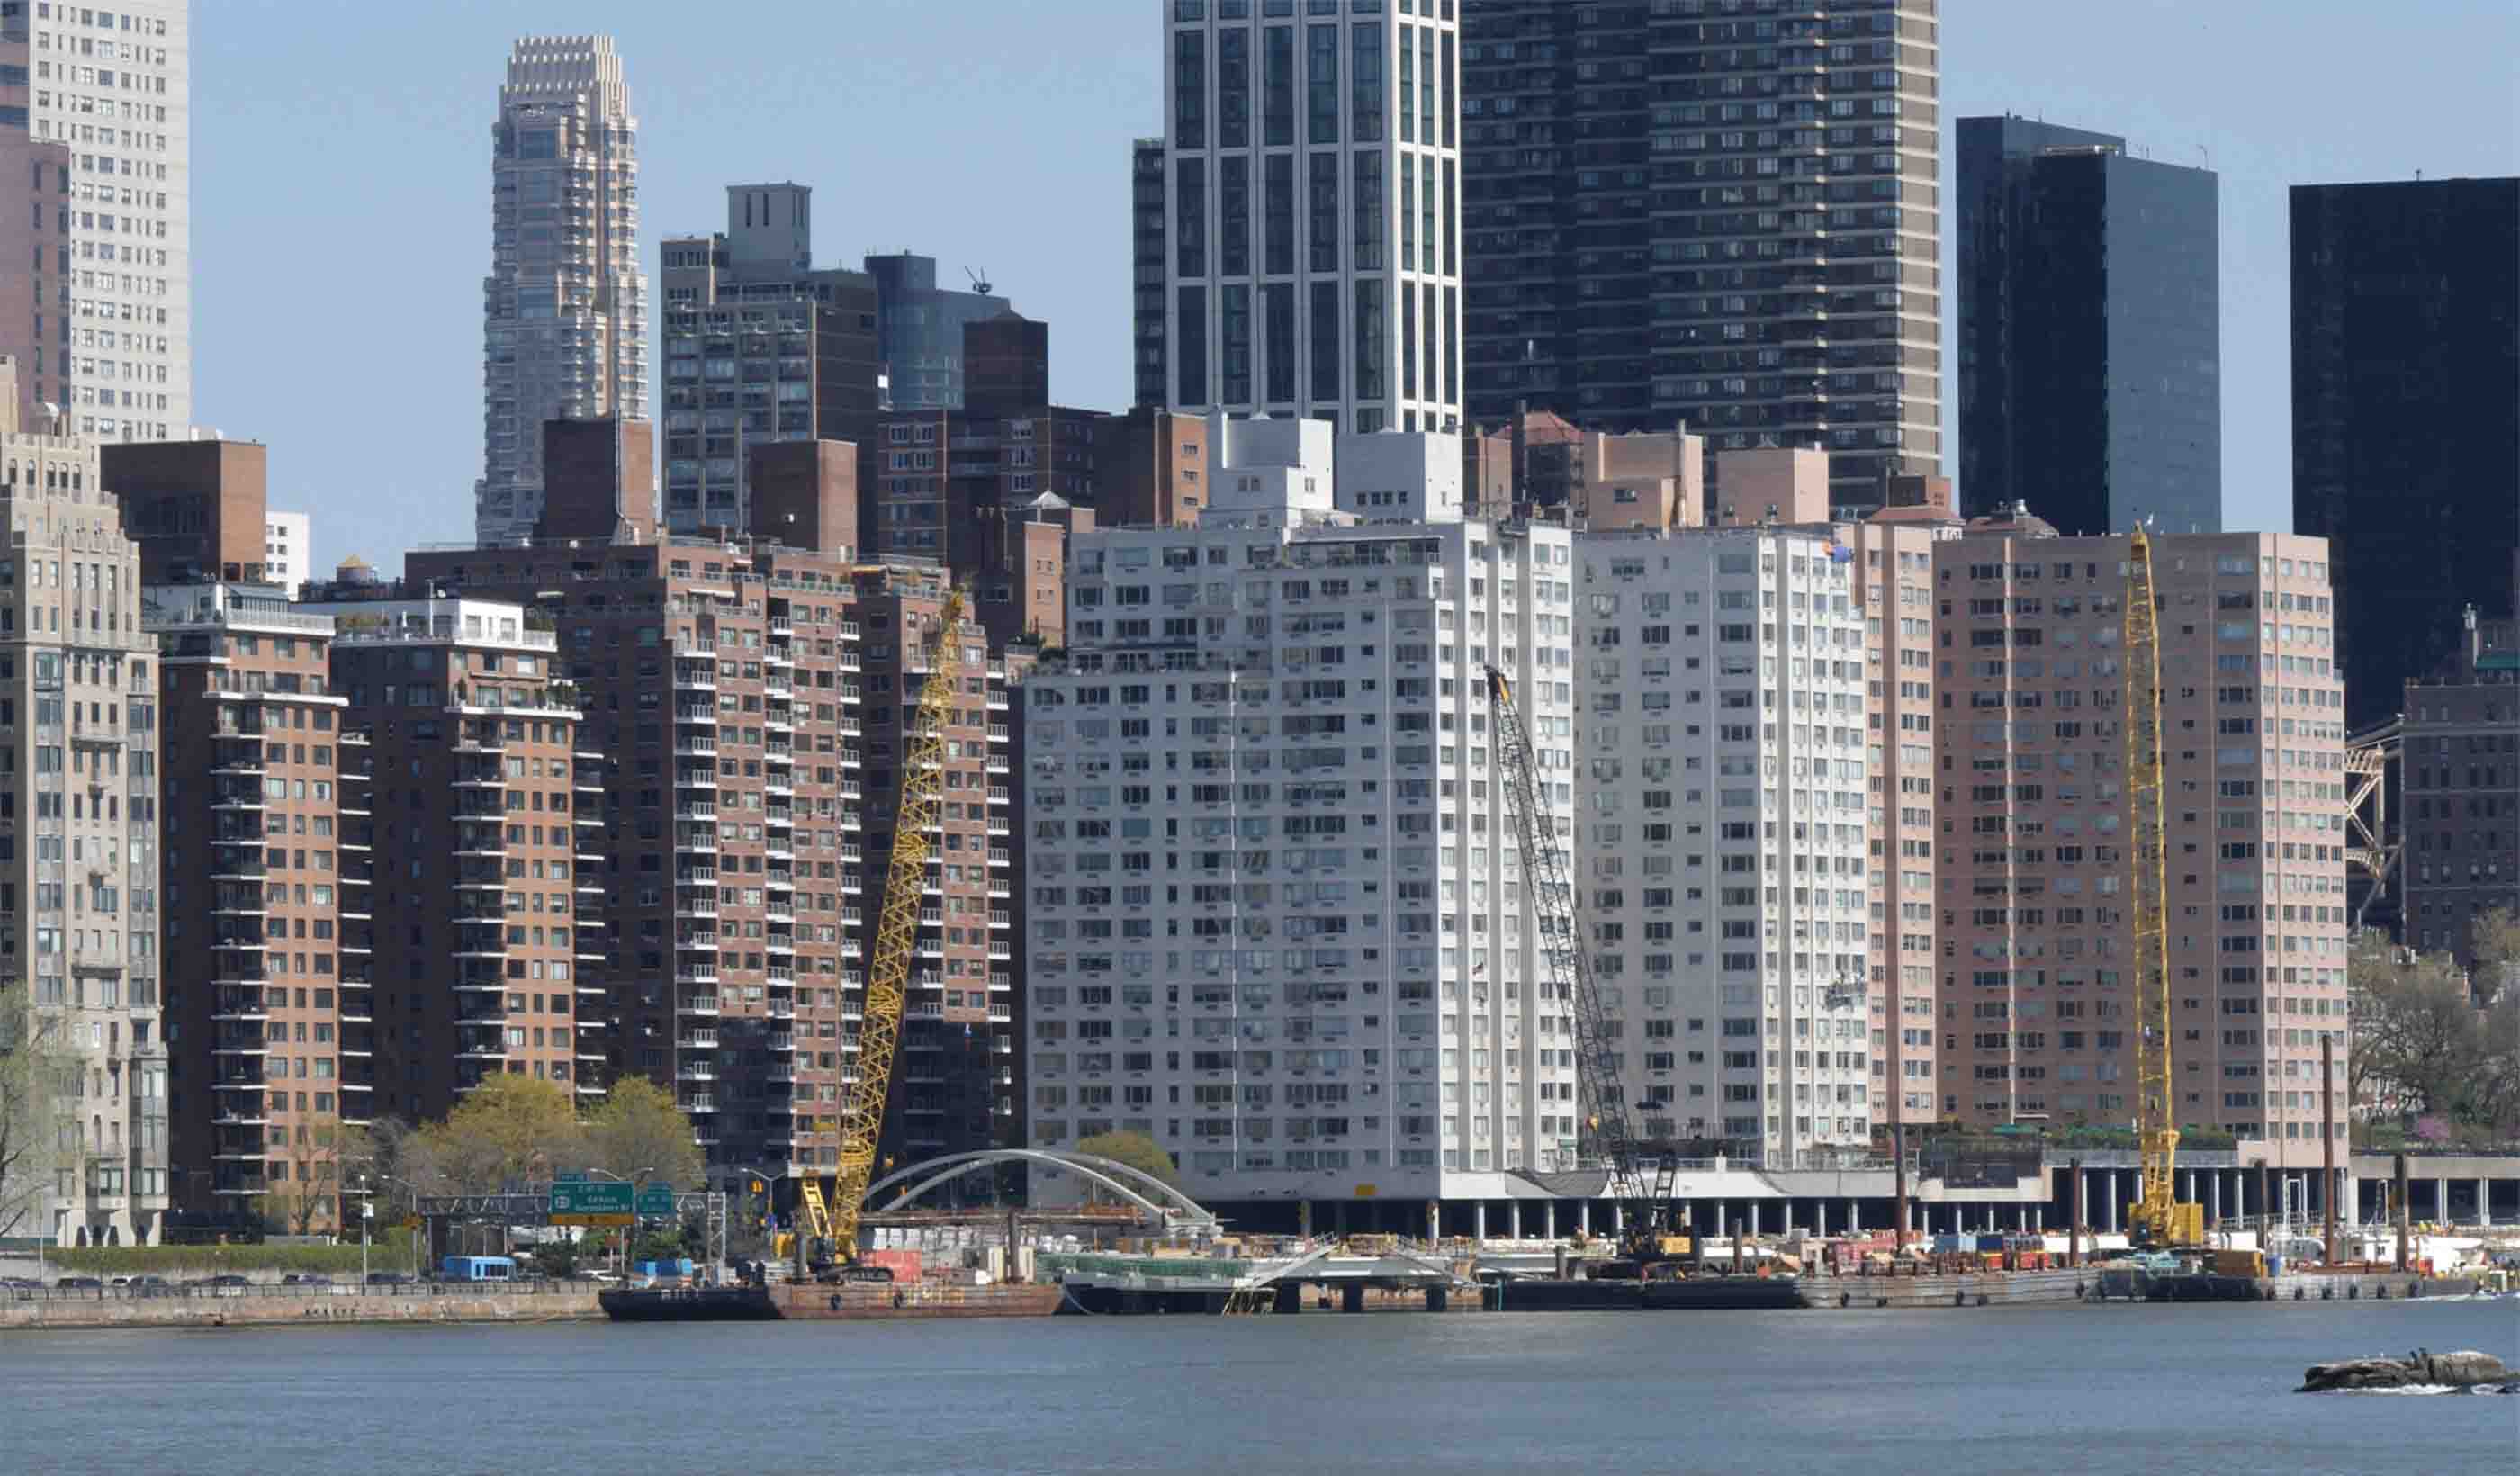 Constructing a new park and transportation corridor on Manhattan’s shore